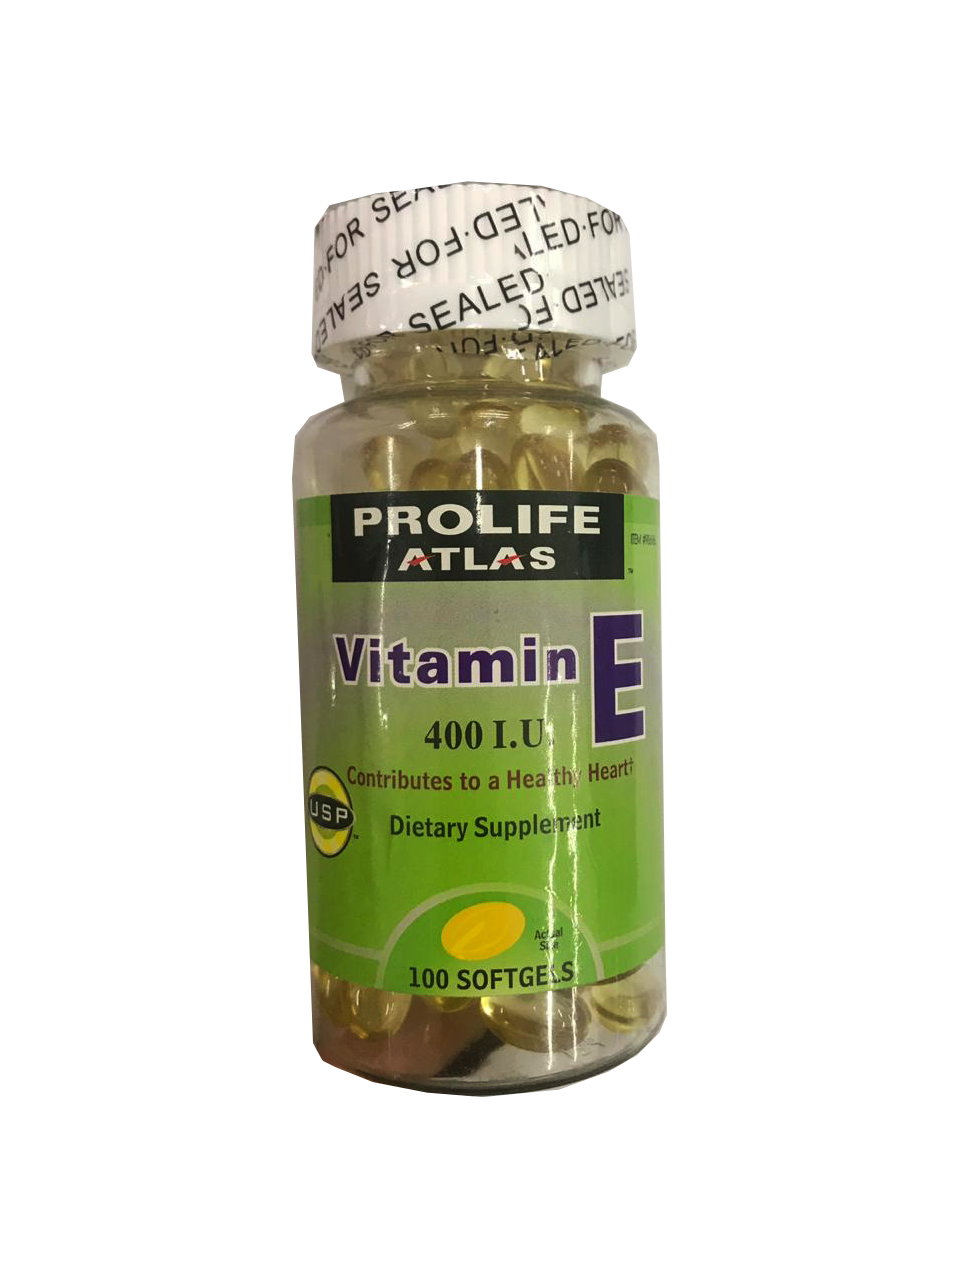 Whole Sale - Pro Life Atlas Vitamins E